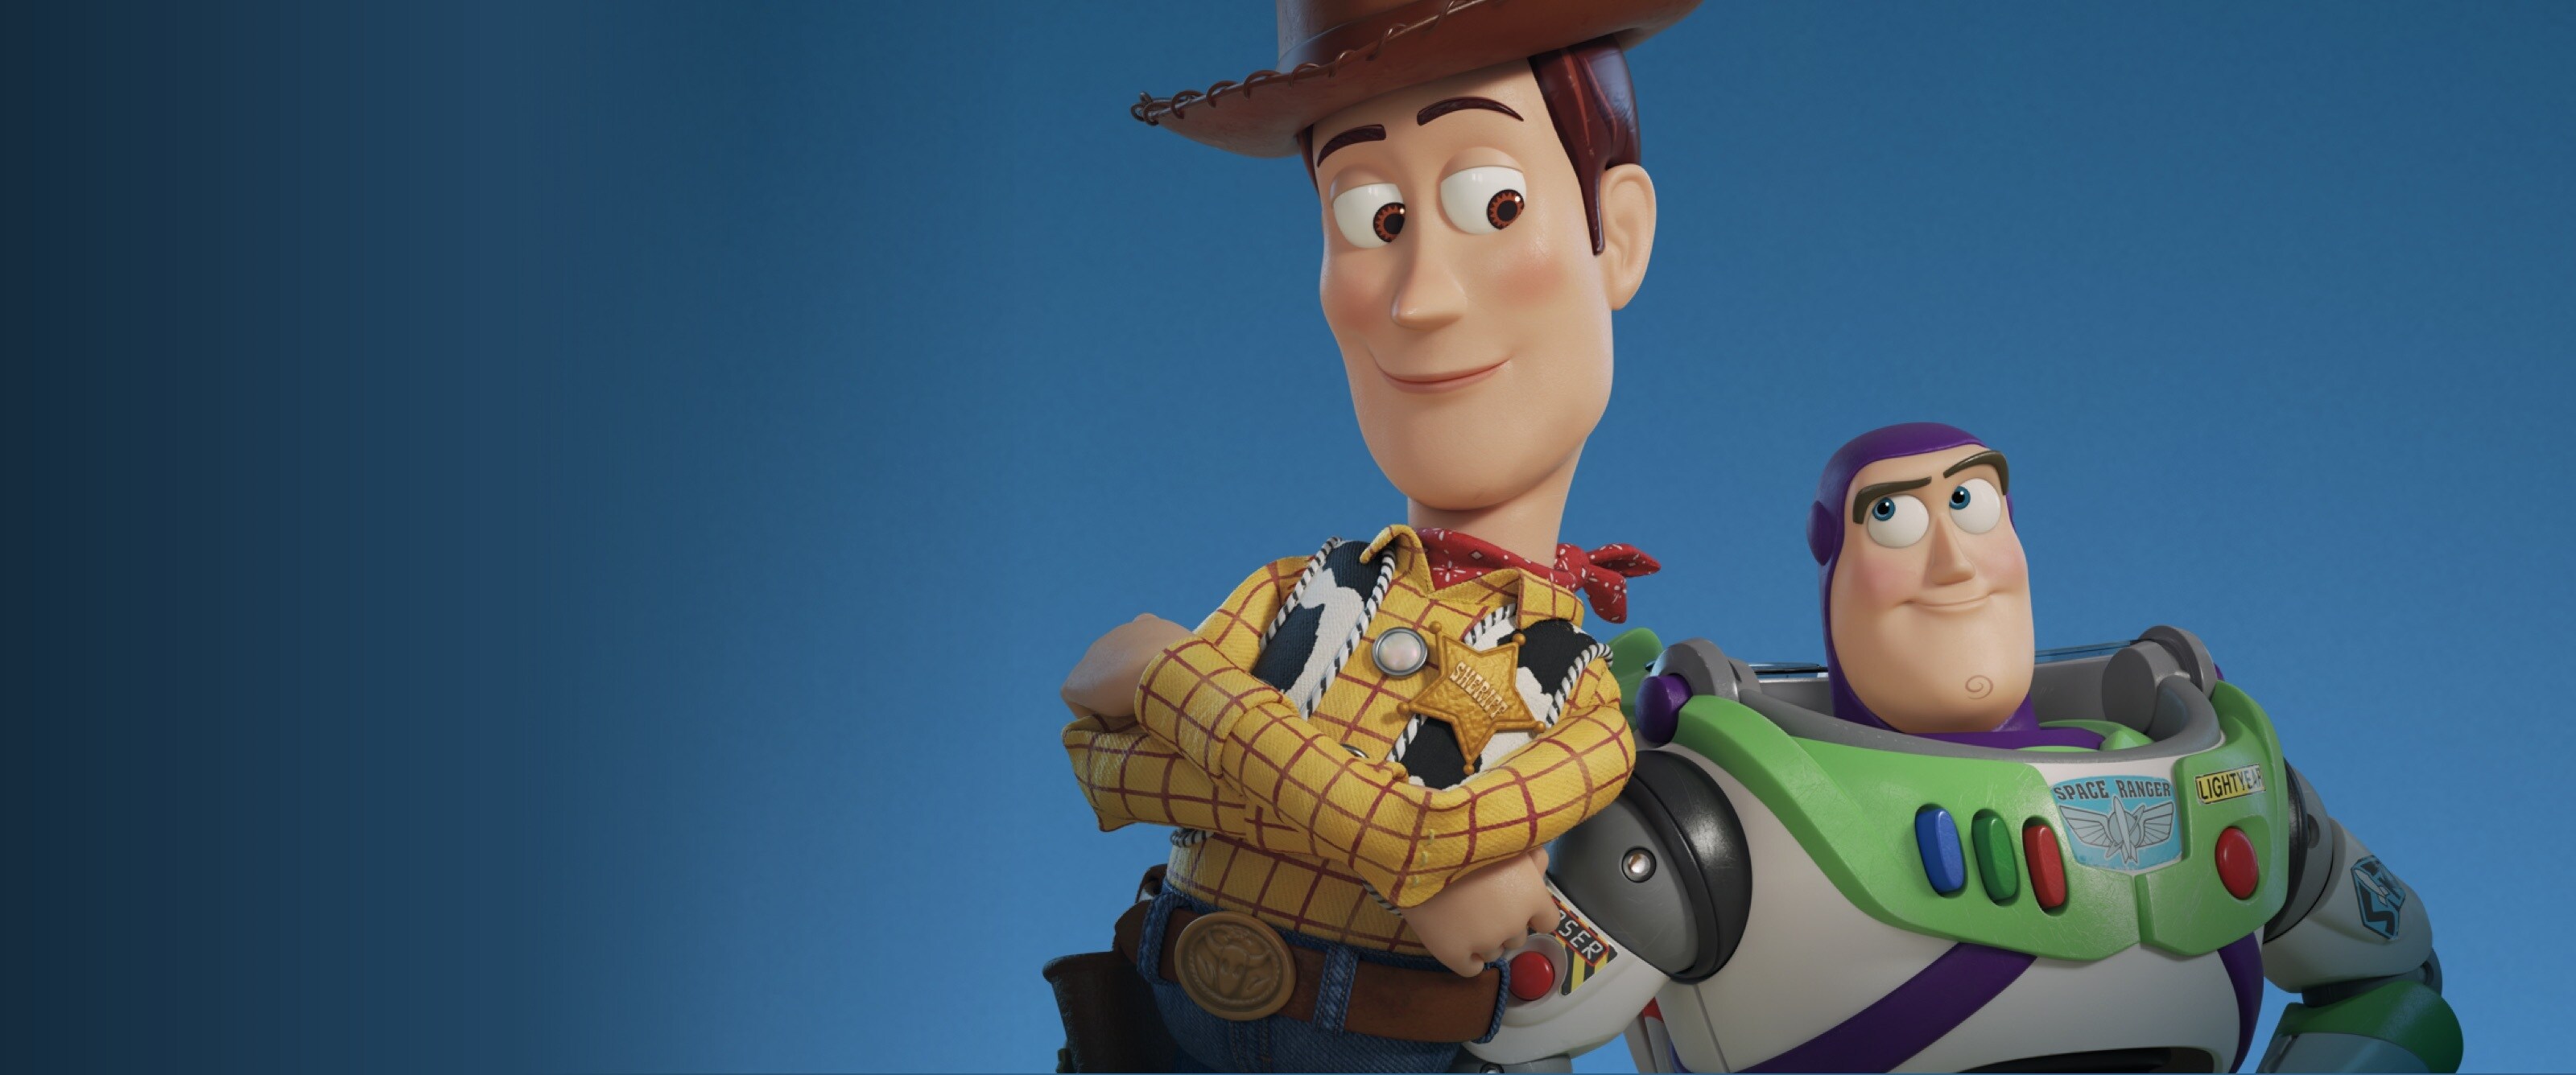 Disney Store Peluche miniature Woody, Toy Story 4